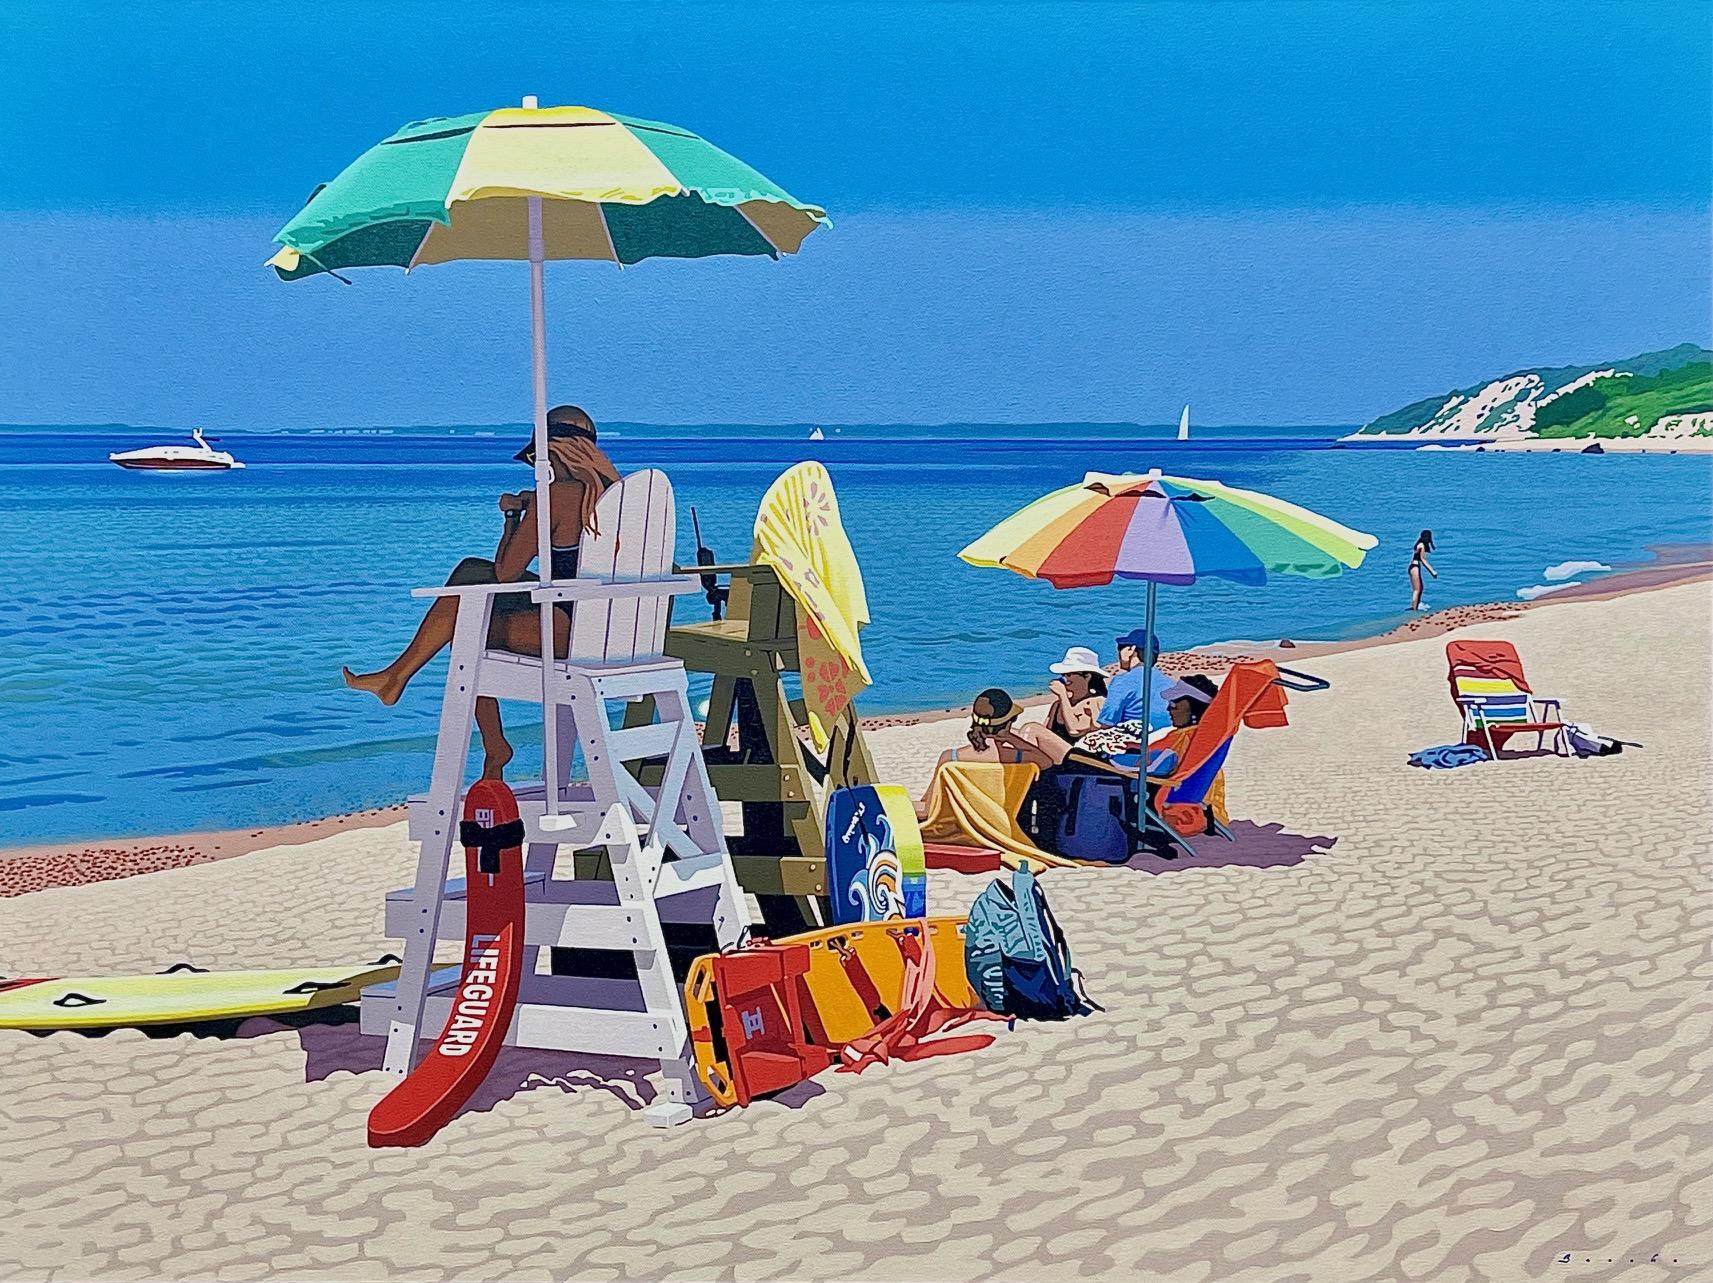 Rob Brooks Landscape Painting - "Summer Job" photorealist oil painting of a lifeguard on the beach, umbrellas